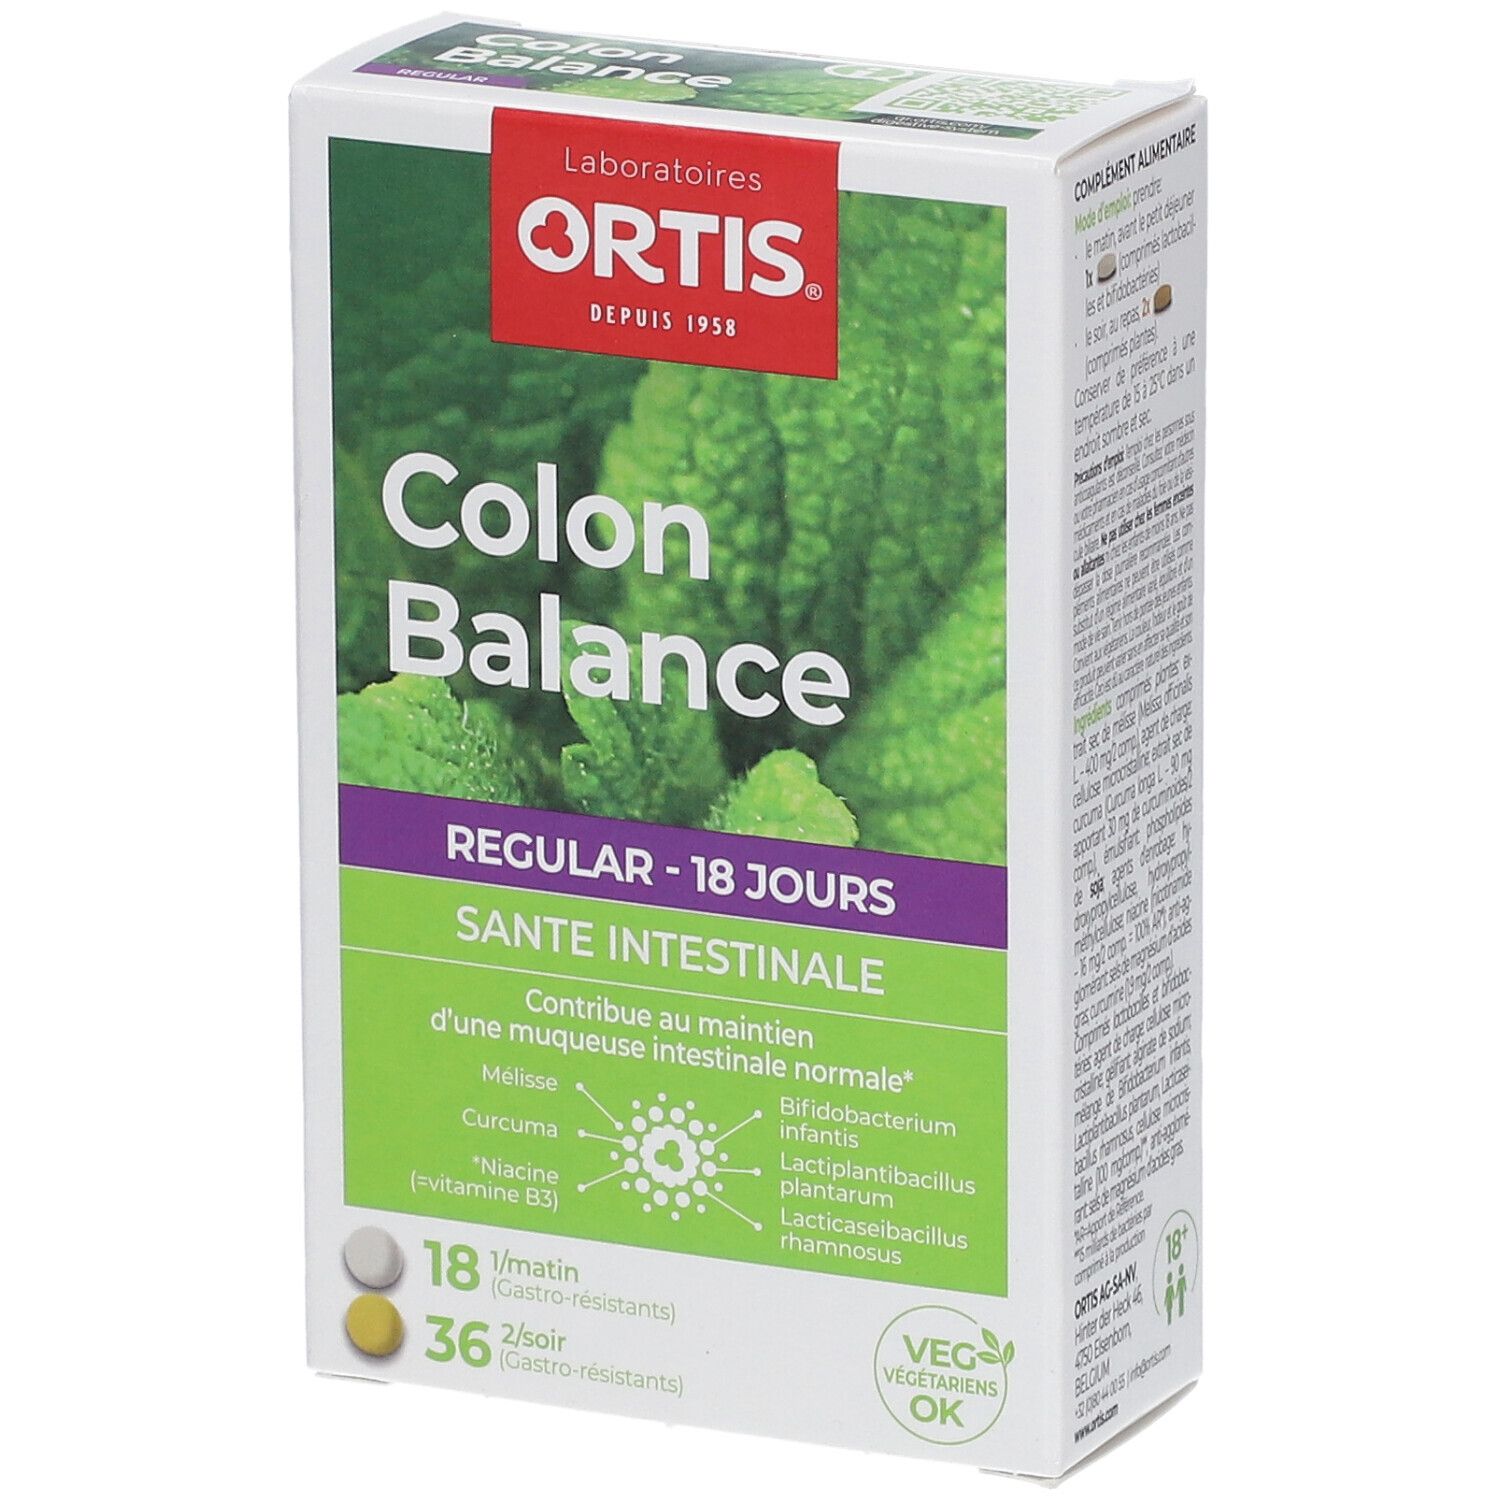 Ortis® Colon Balance Regular